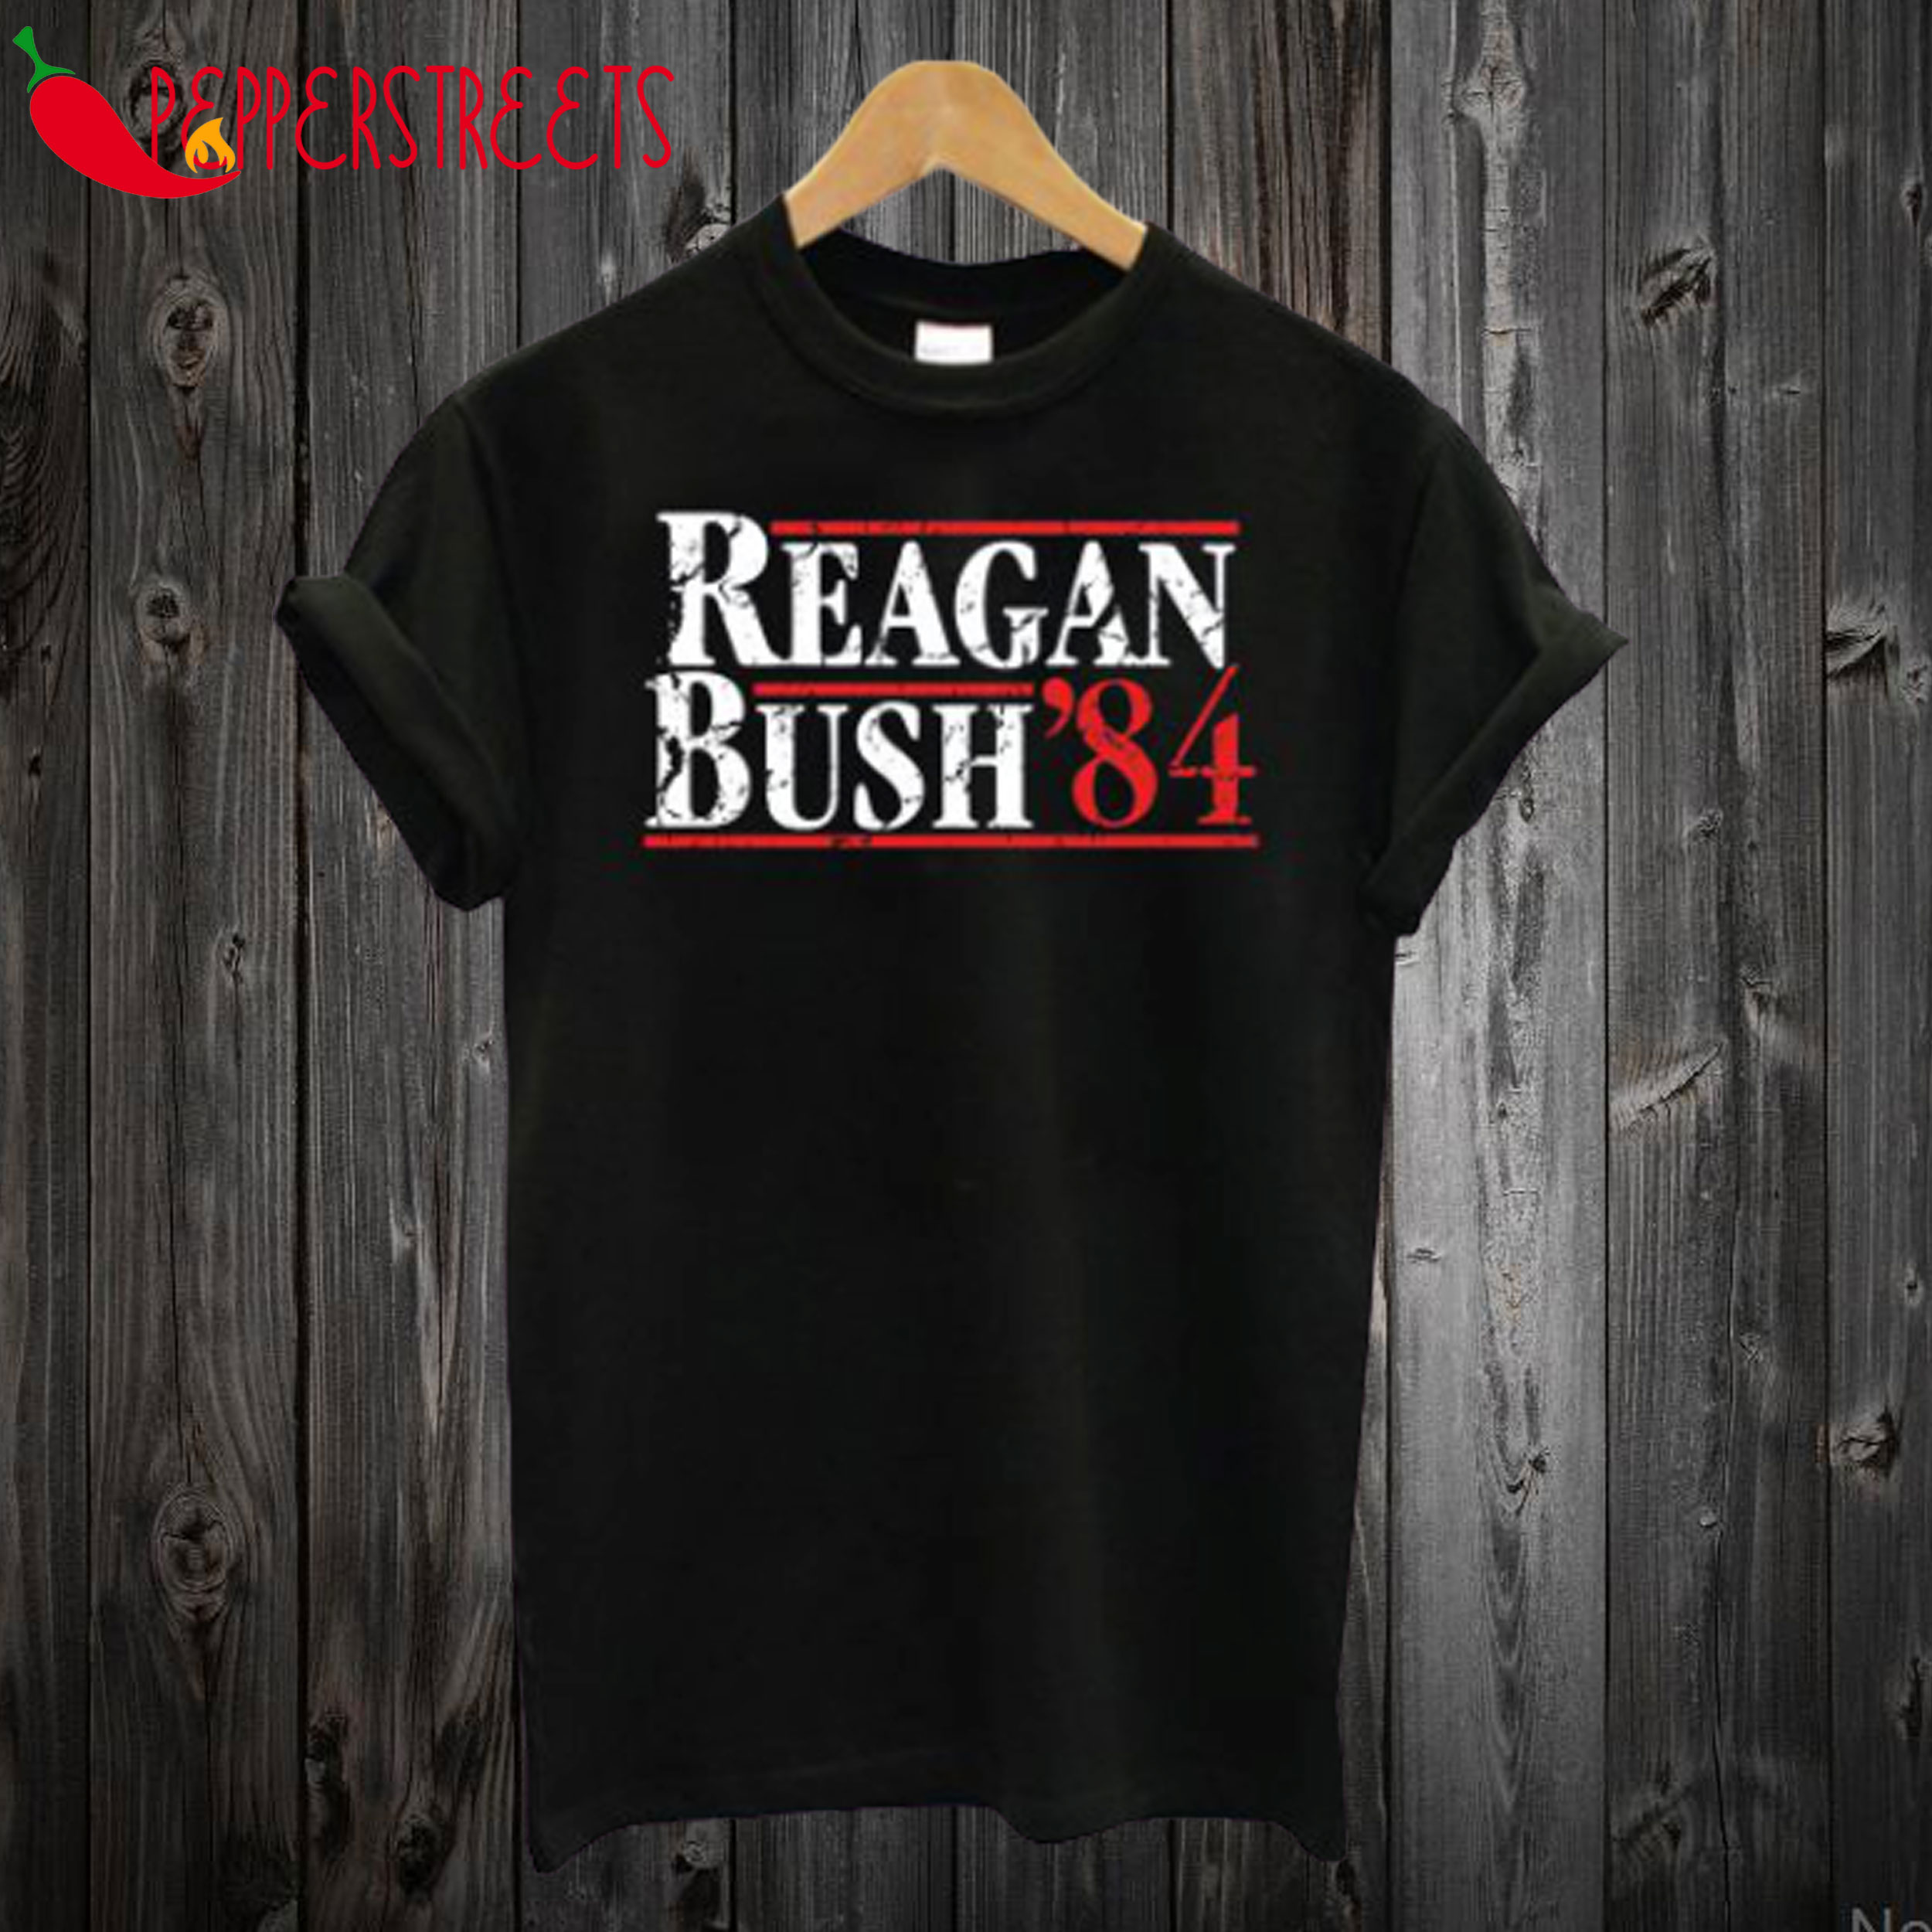 Reagan Bush 84 Graphic T shirt